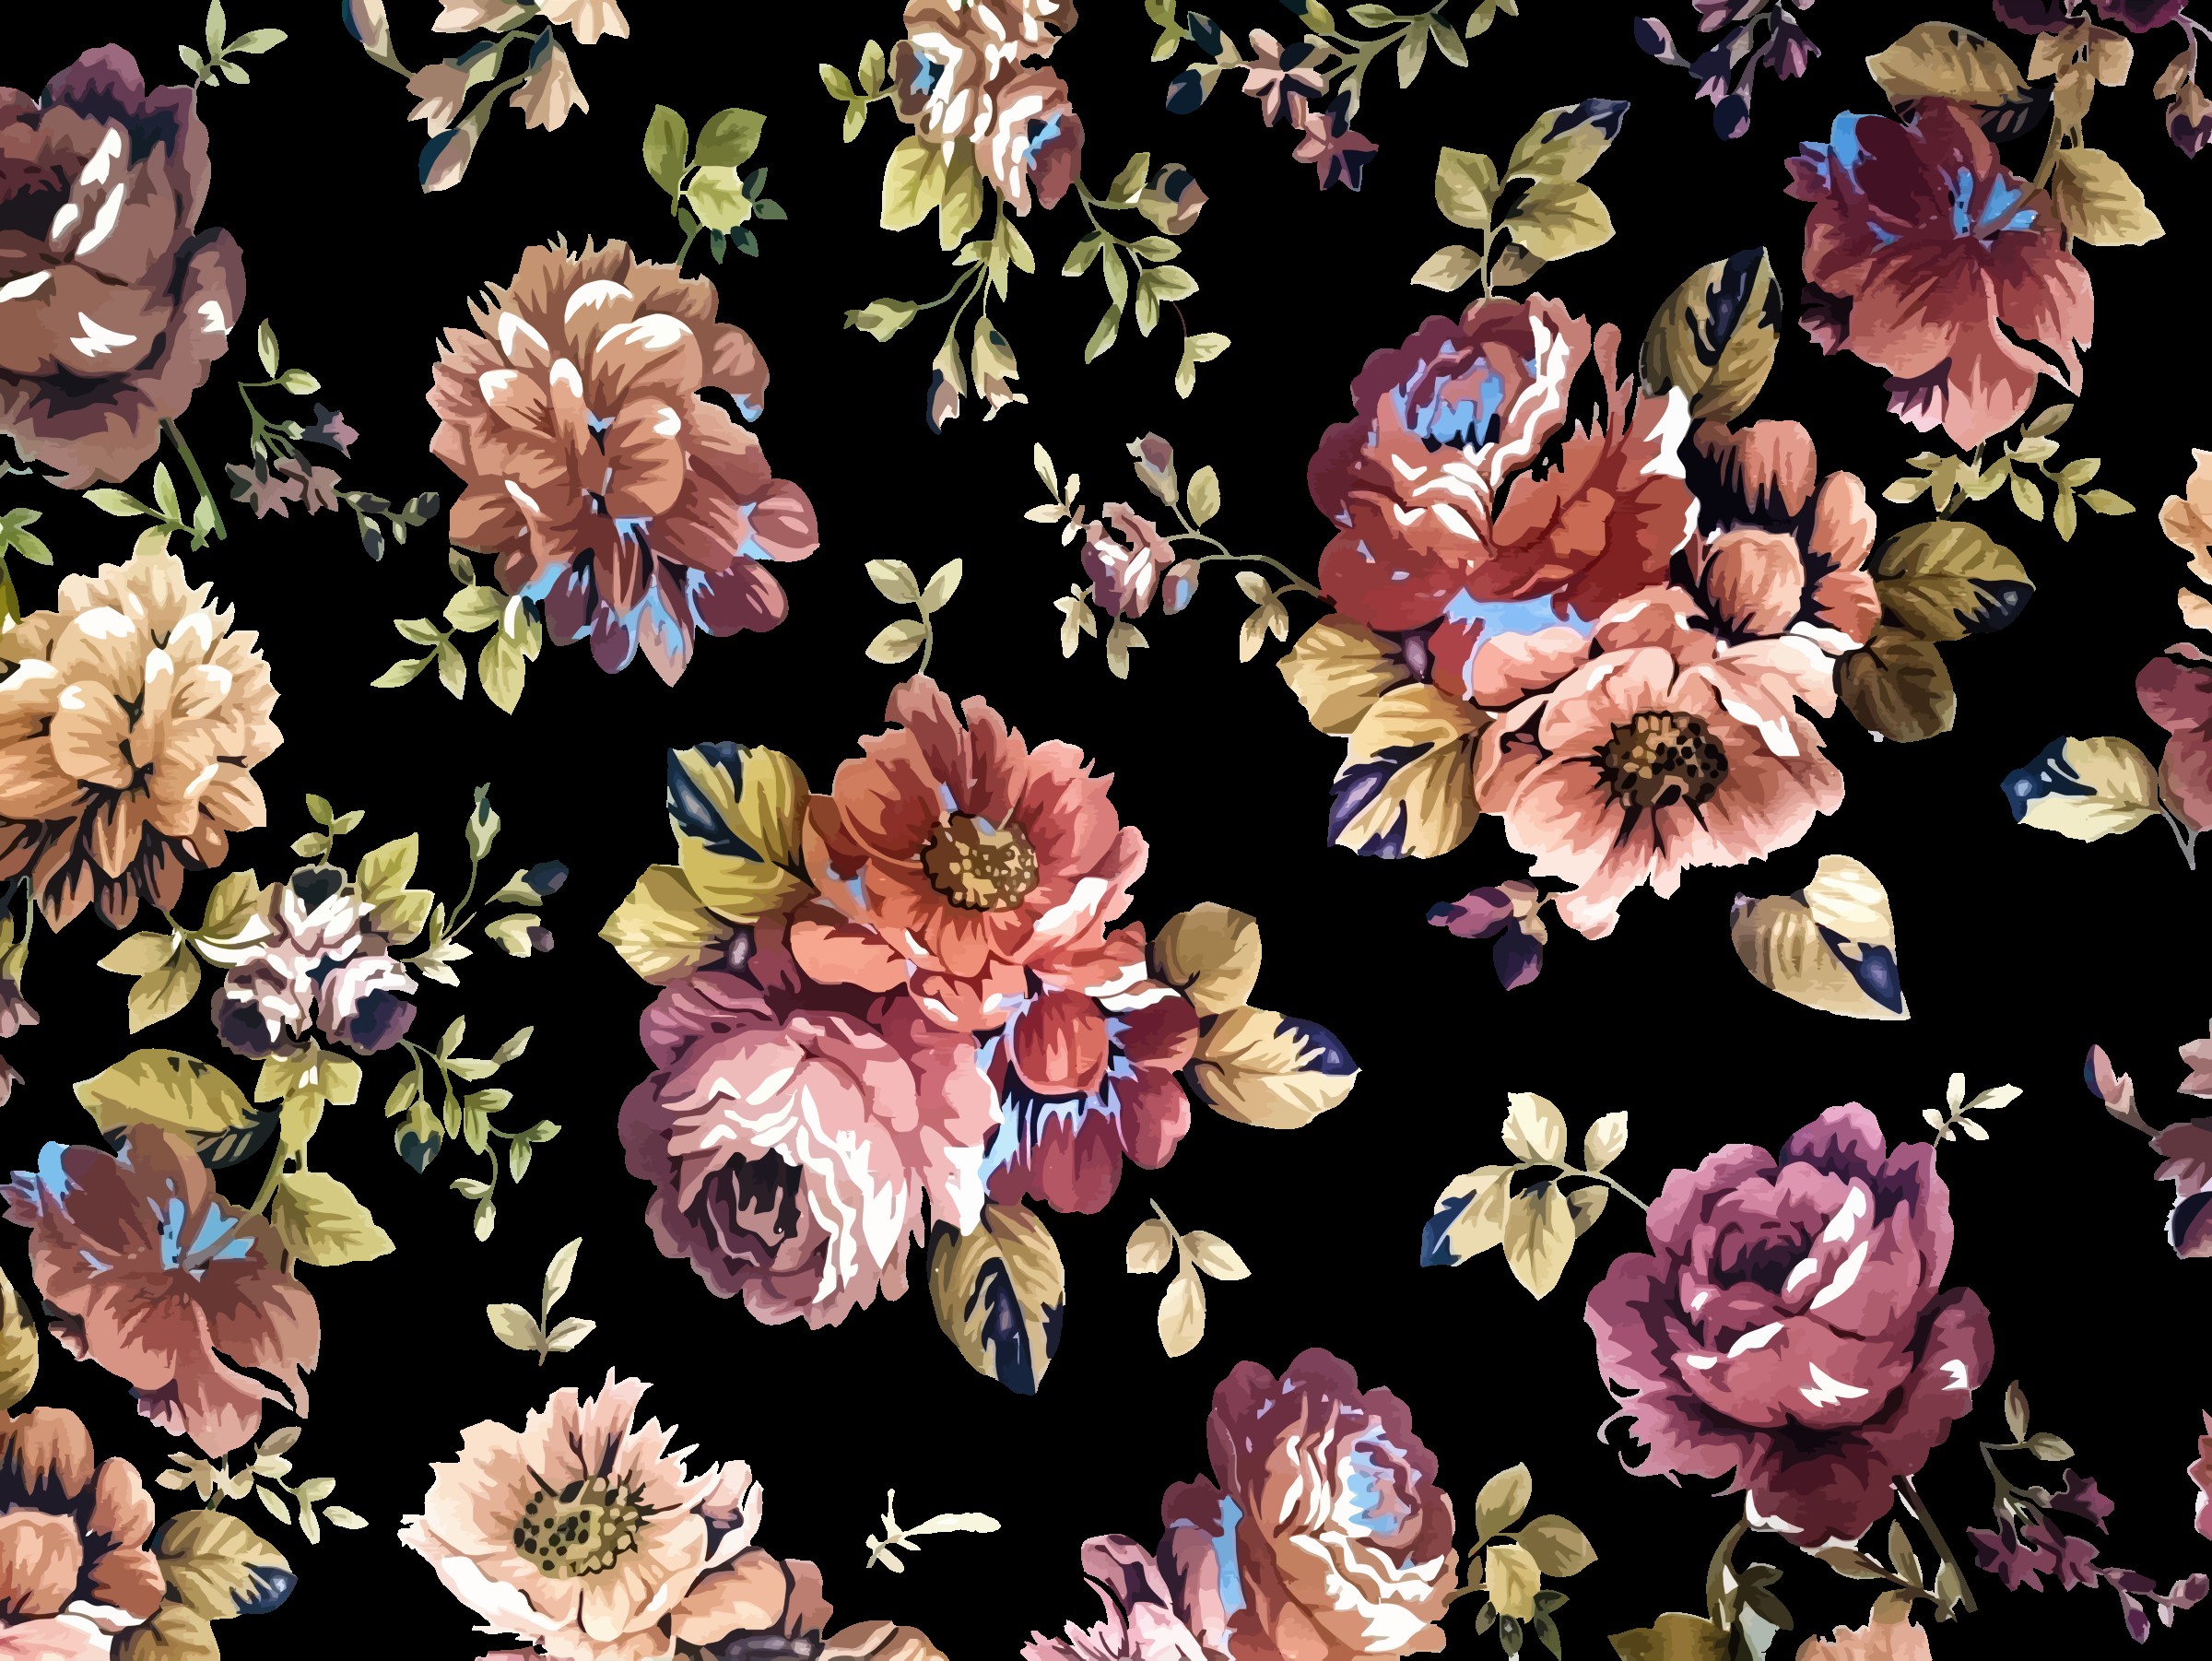 Vintage Floral background ·① Download free cool full HD backgrounds for